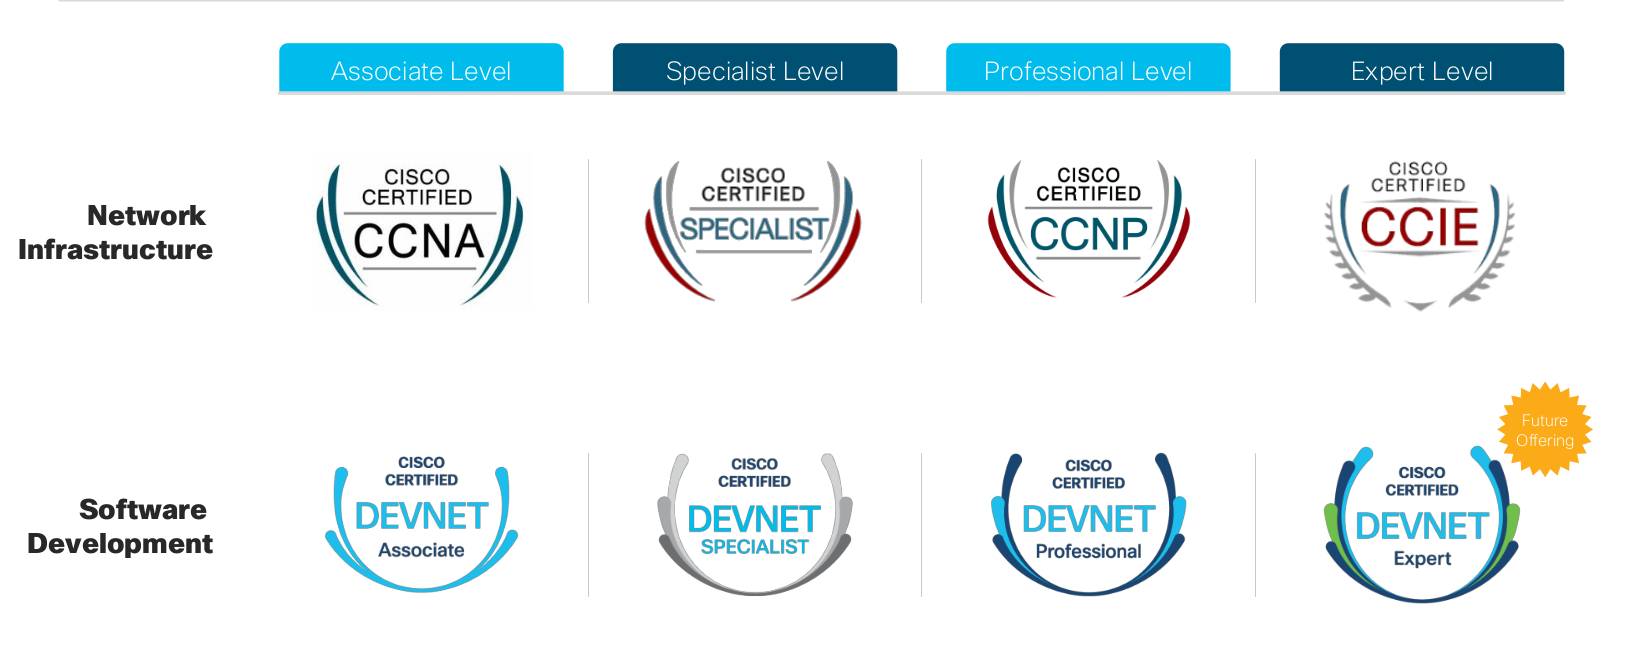 New Cisco Certification Tracks